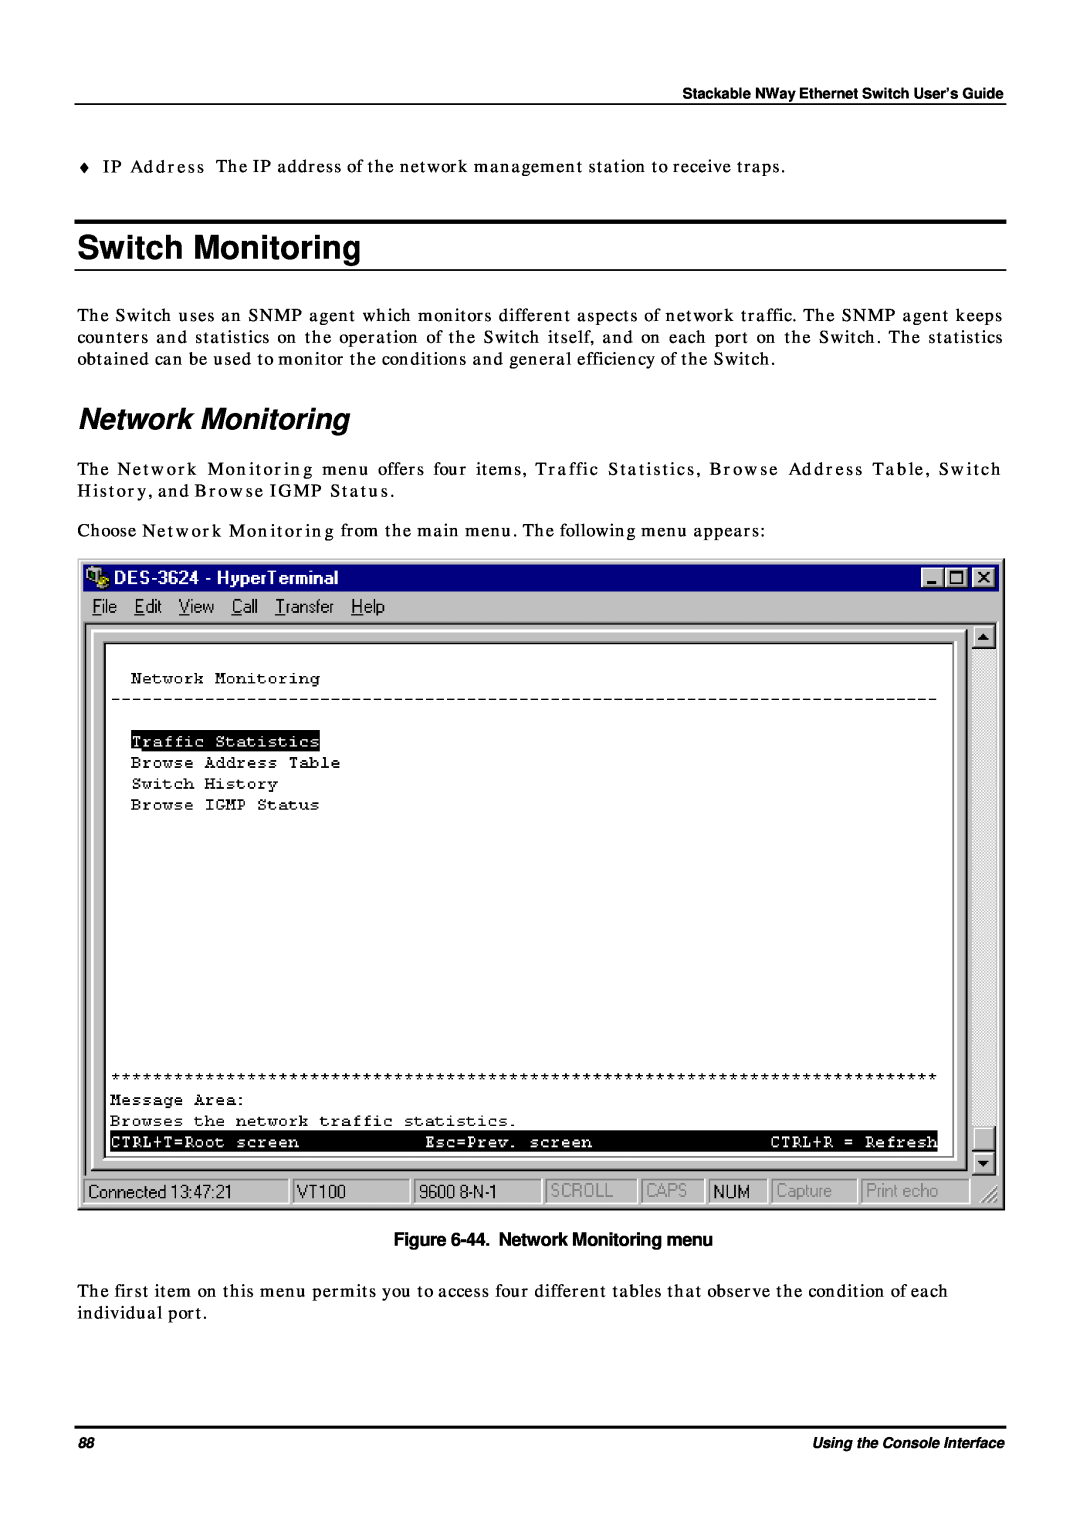 D-Link DES-3624 manual Switch Monitoring, 44. Network Monitoring menu 